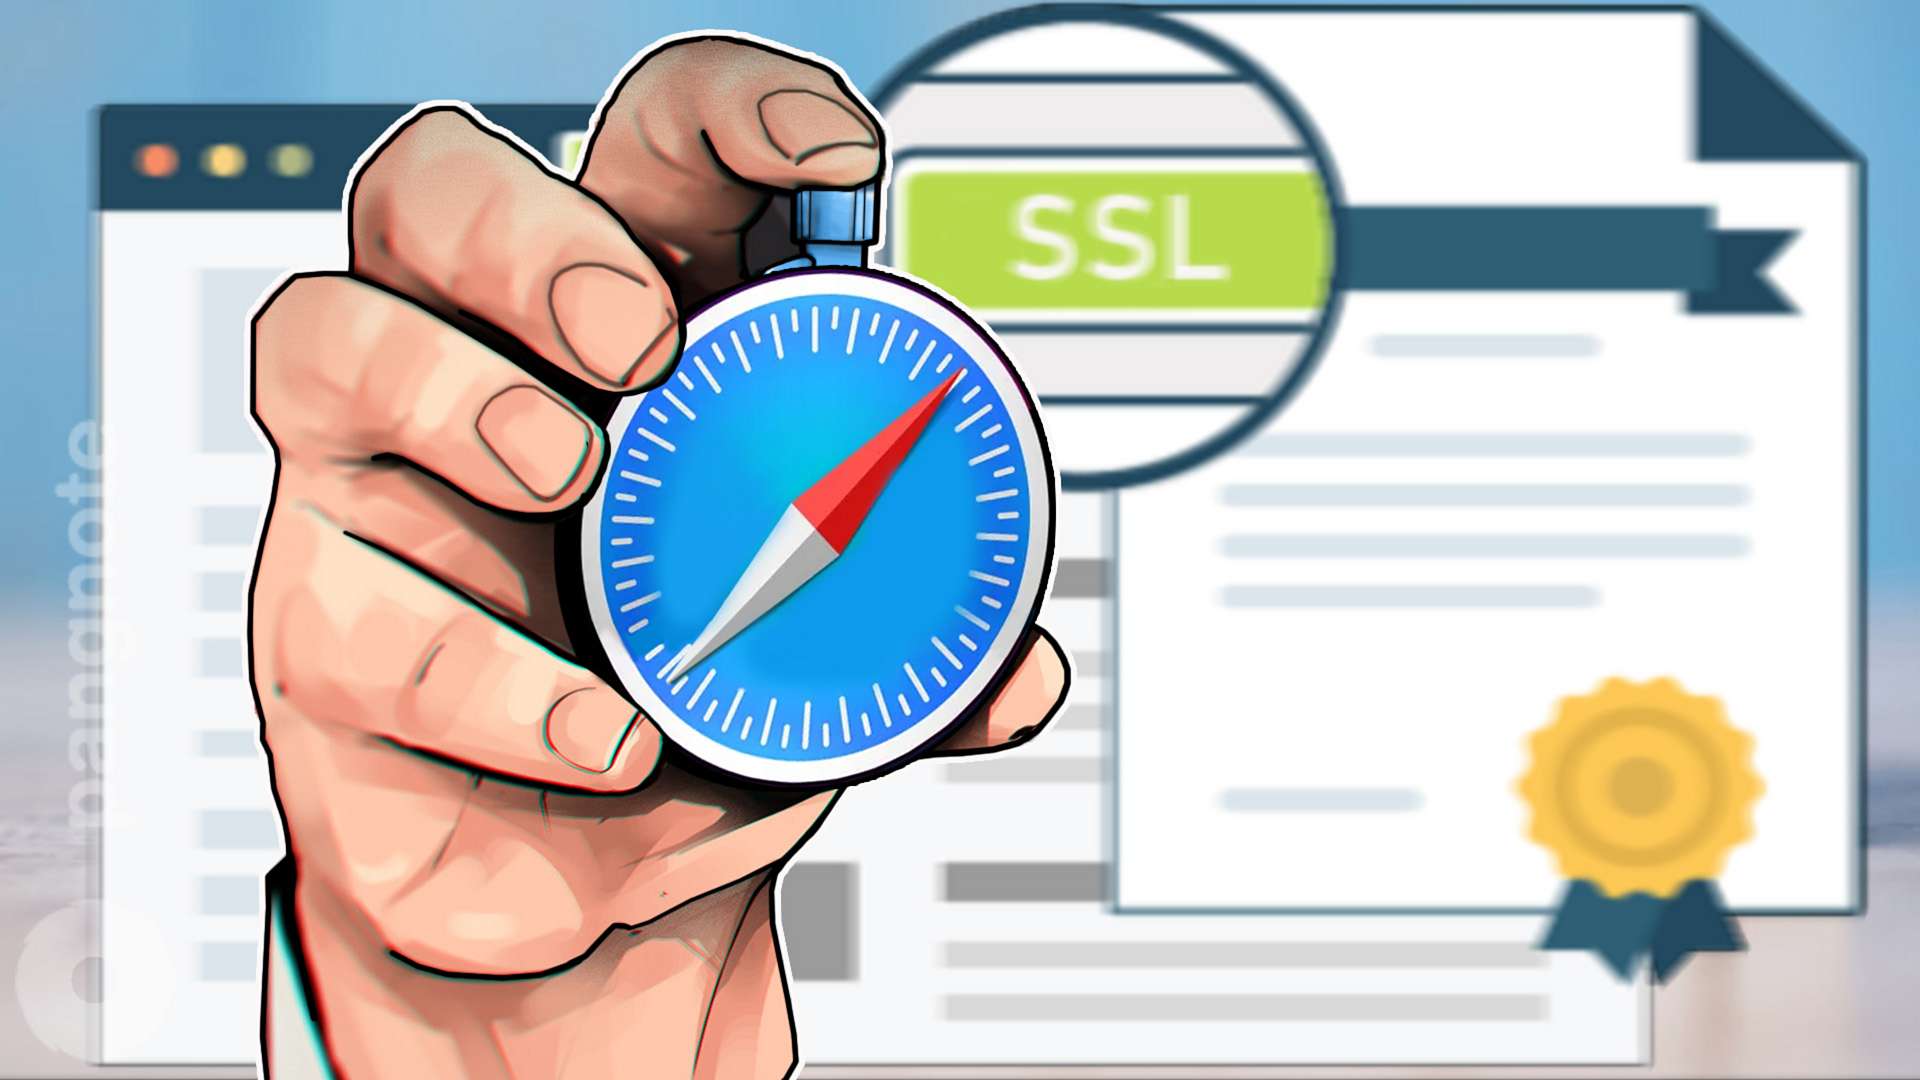 Apple introduces a 1-year SSL limit for Safari